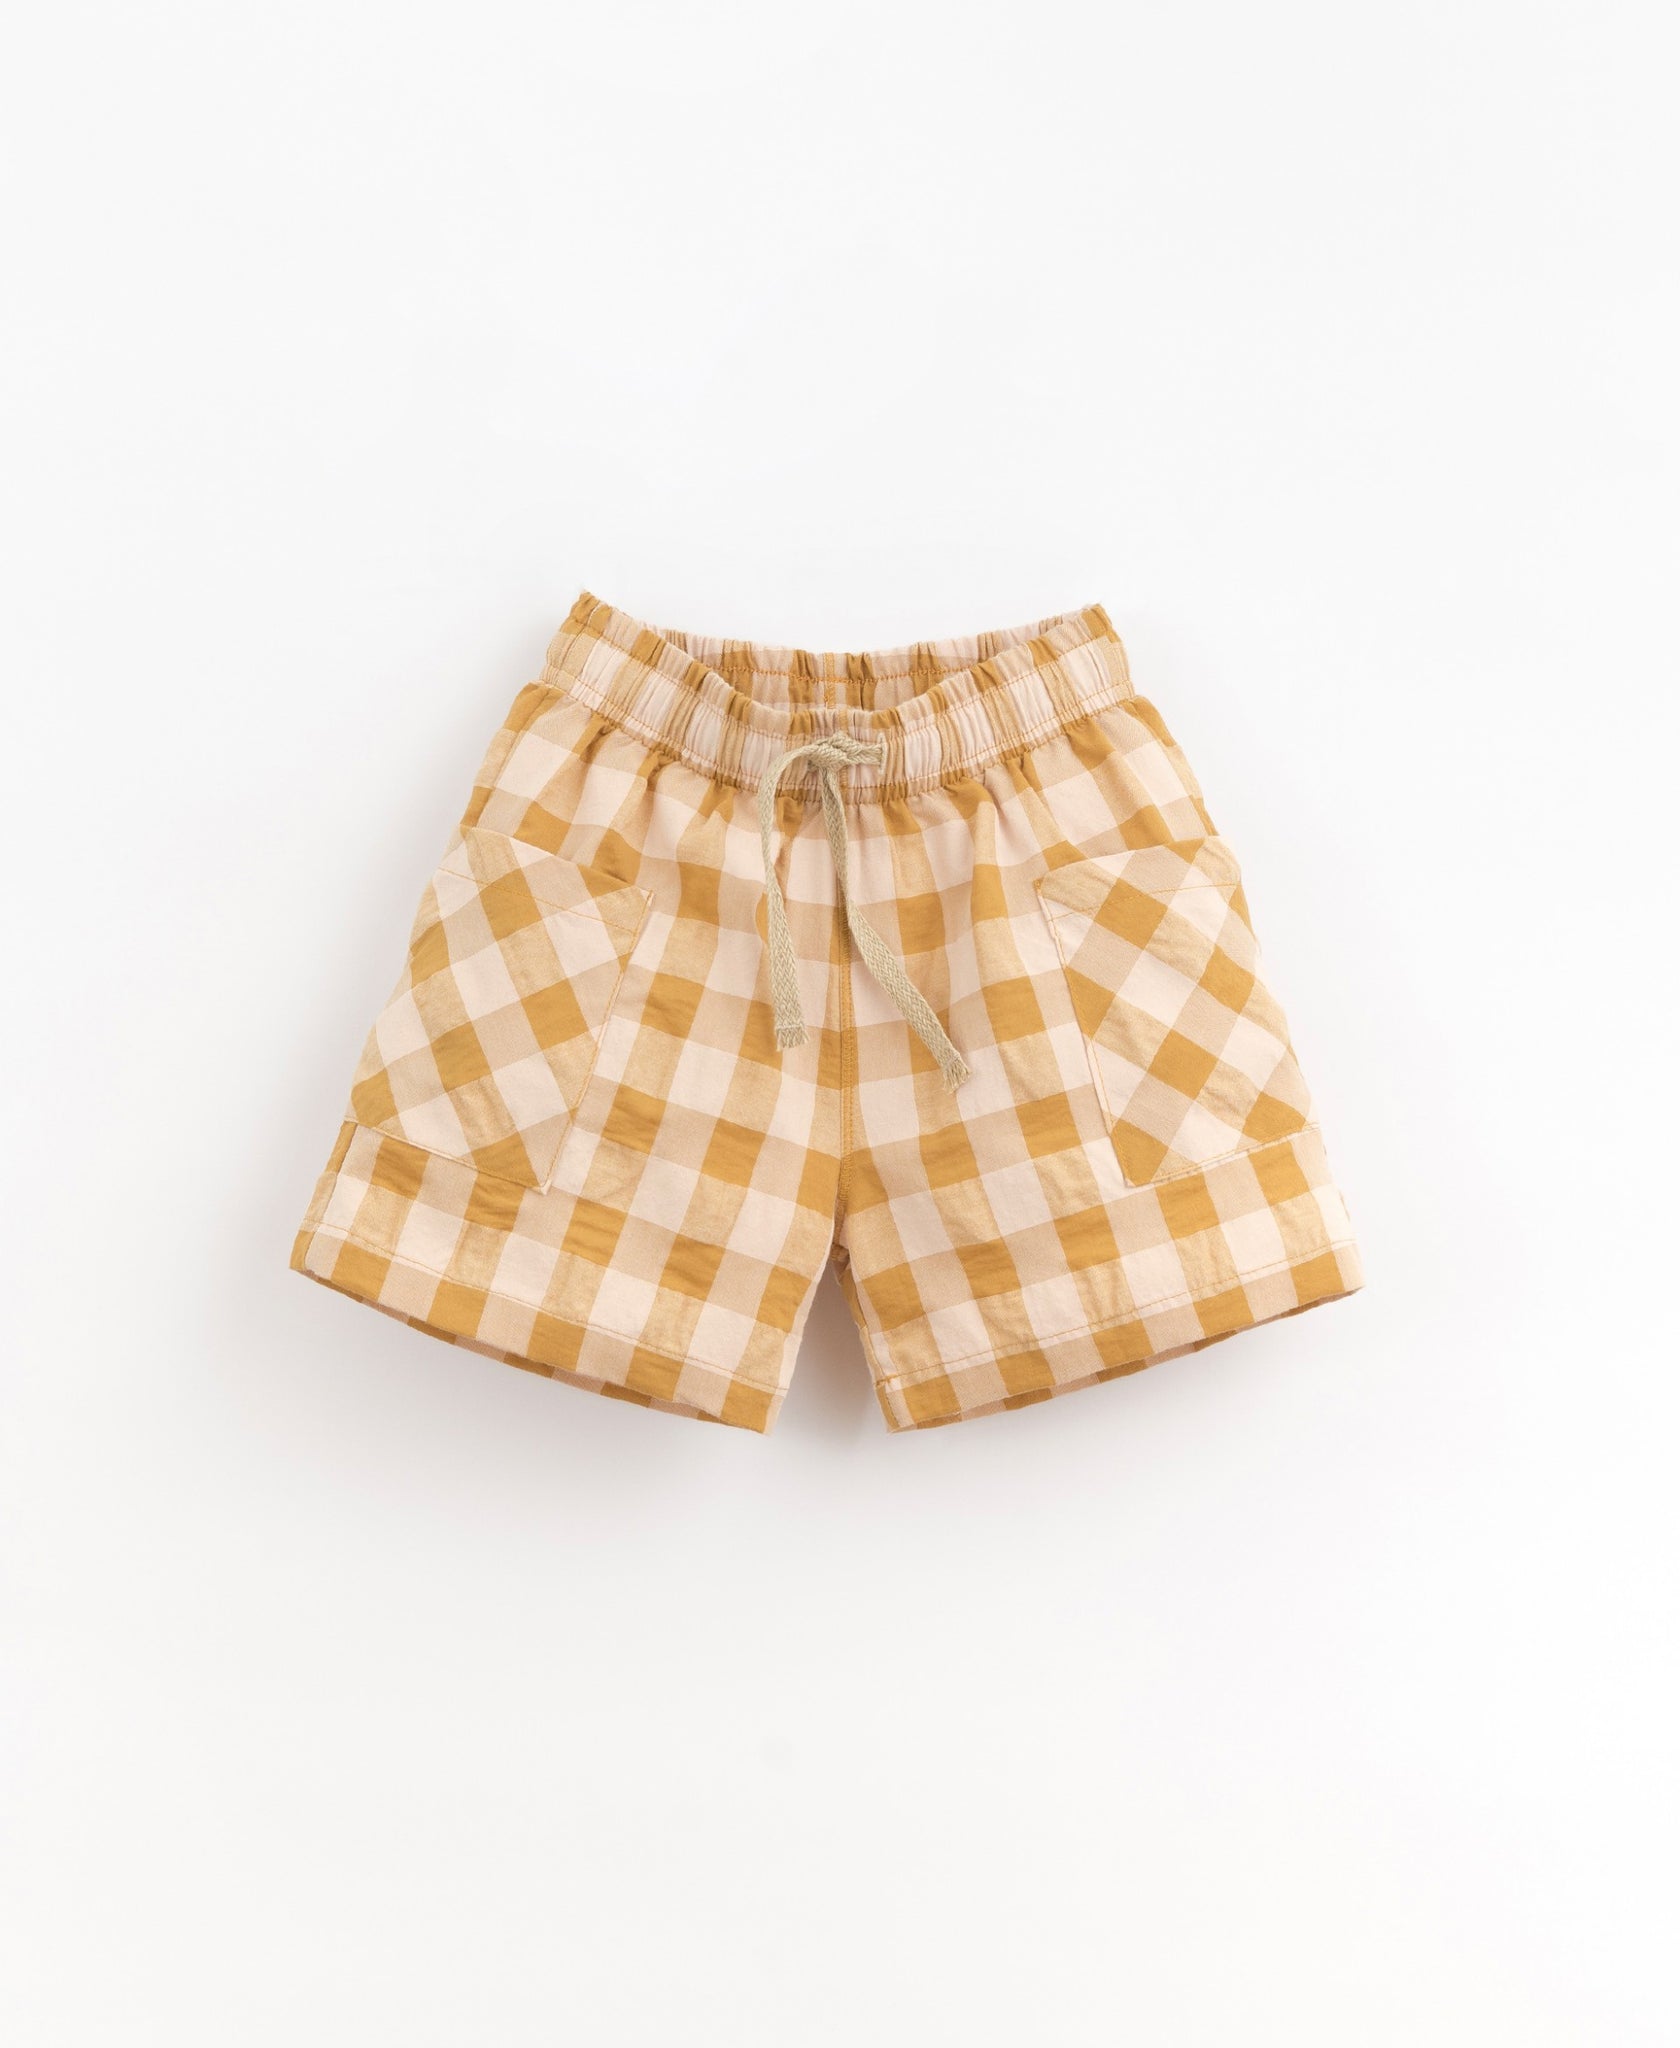 Lemongrass Vichy Shorts *ONE LEFT - 6Y*